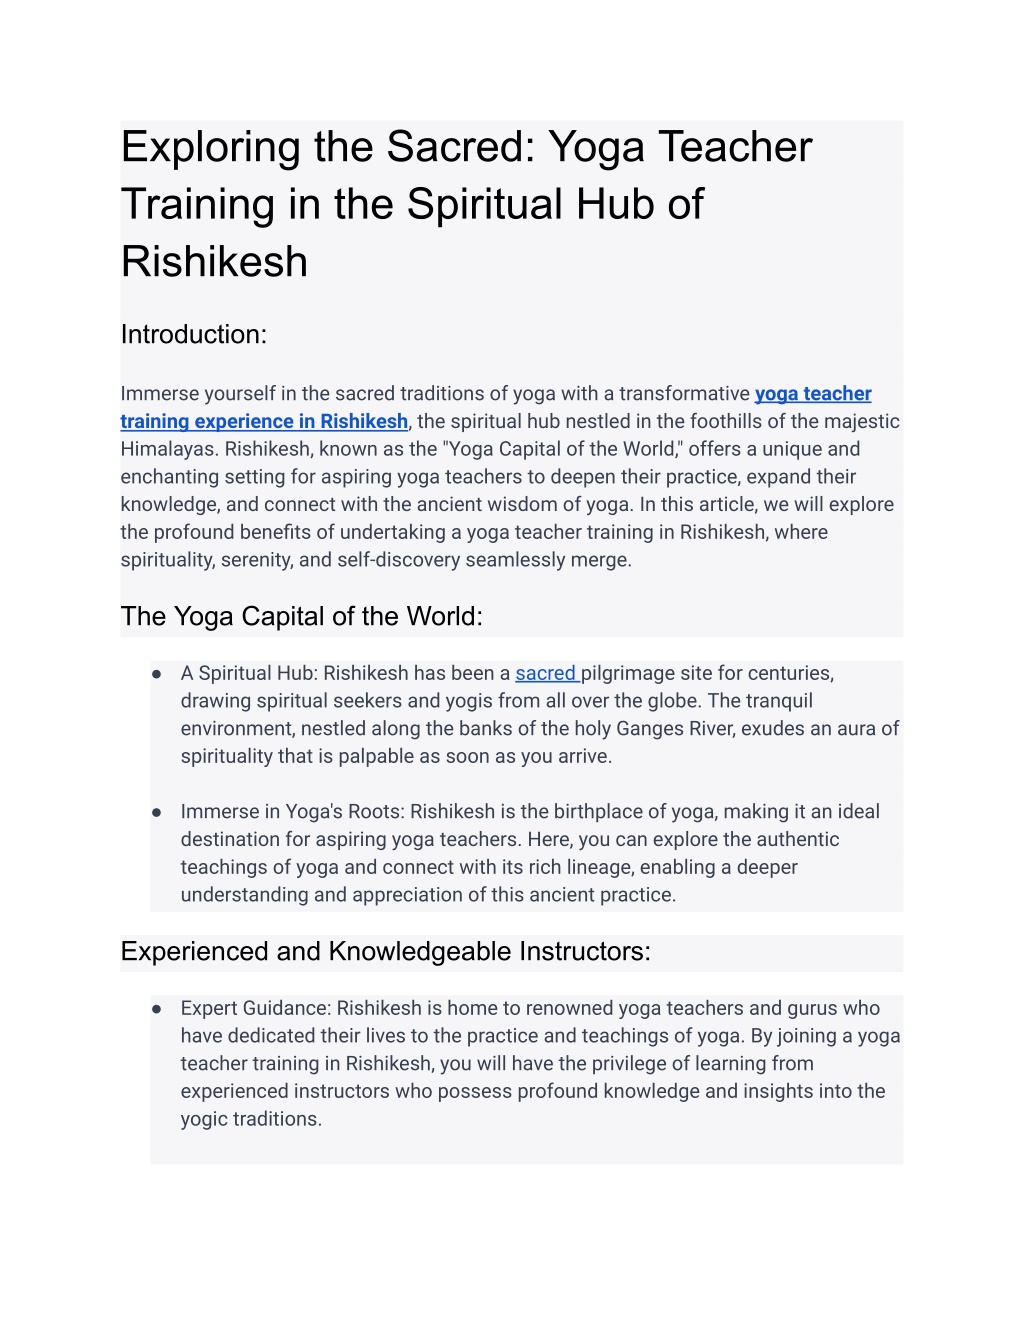 PPT - Exploring the Sacred_ Yoga Teacher Training in the Spiritual Hub of  Rishikesh PowerPoint Presentation - ID:12277145